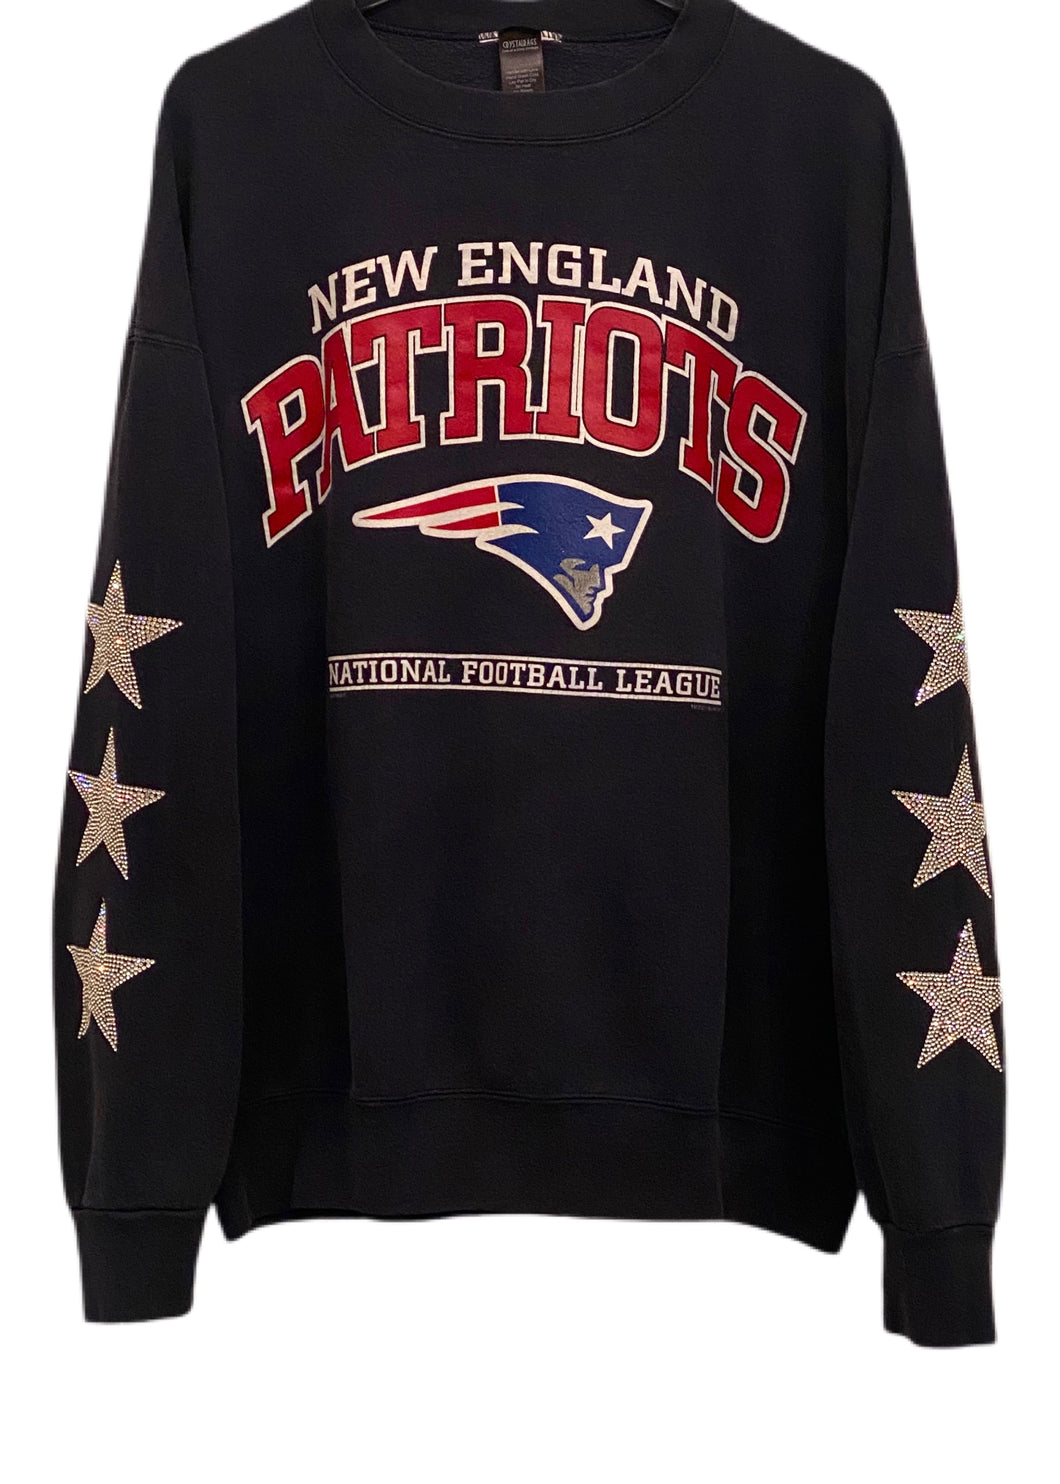 New England Patriots, Football One of a KIND Vintage Sweatshirt with Three Crystal Star Design